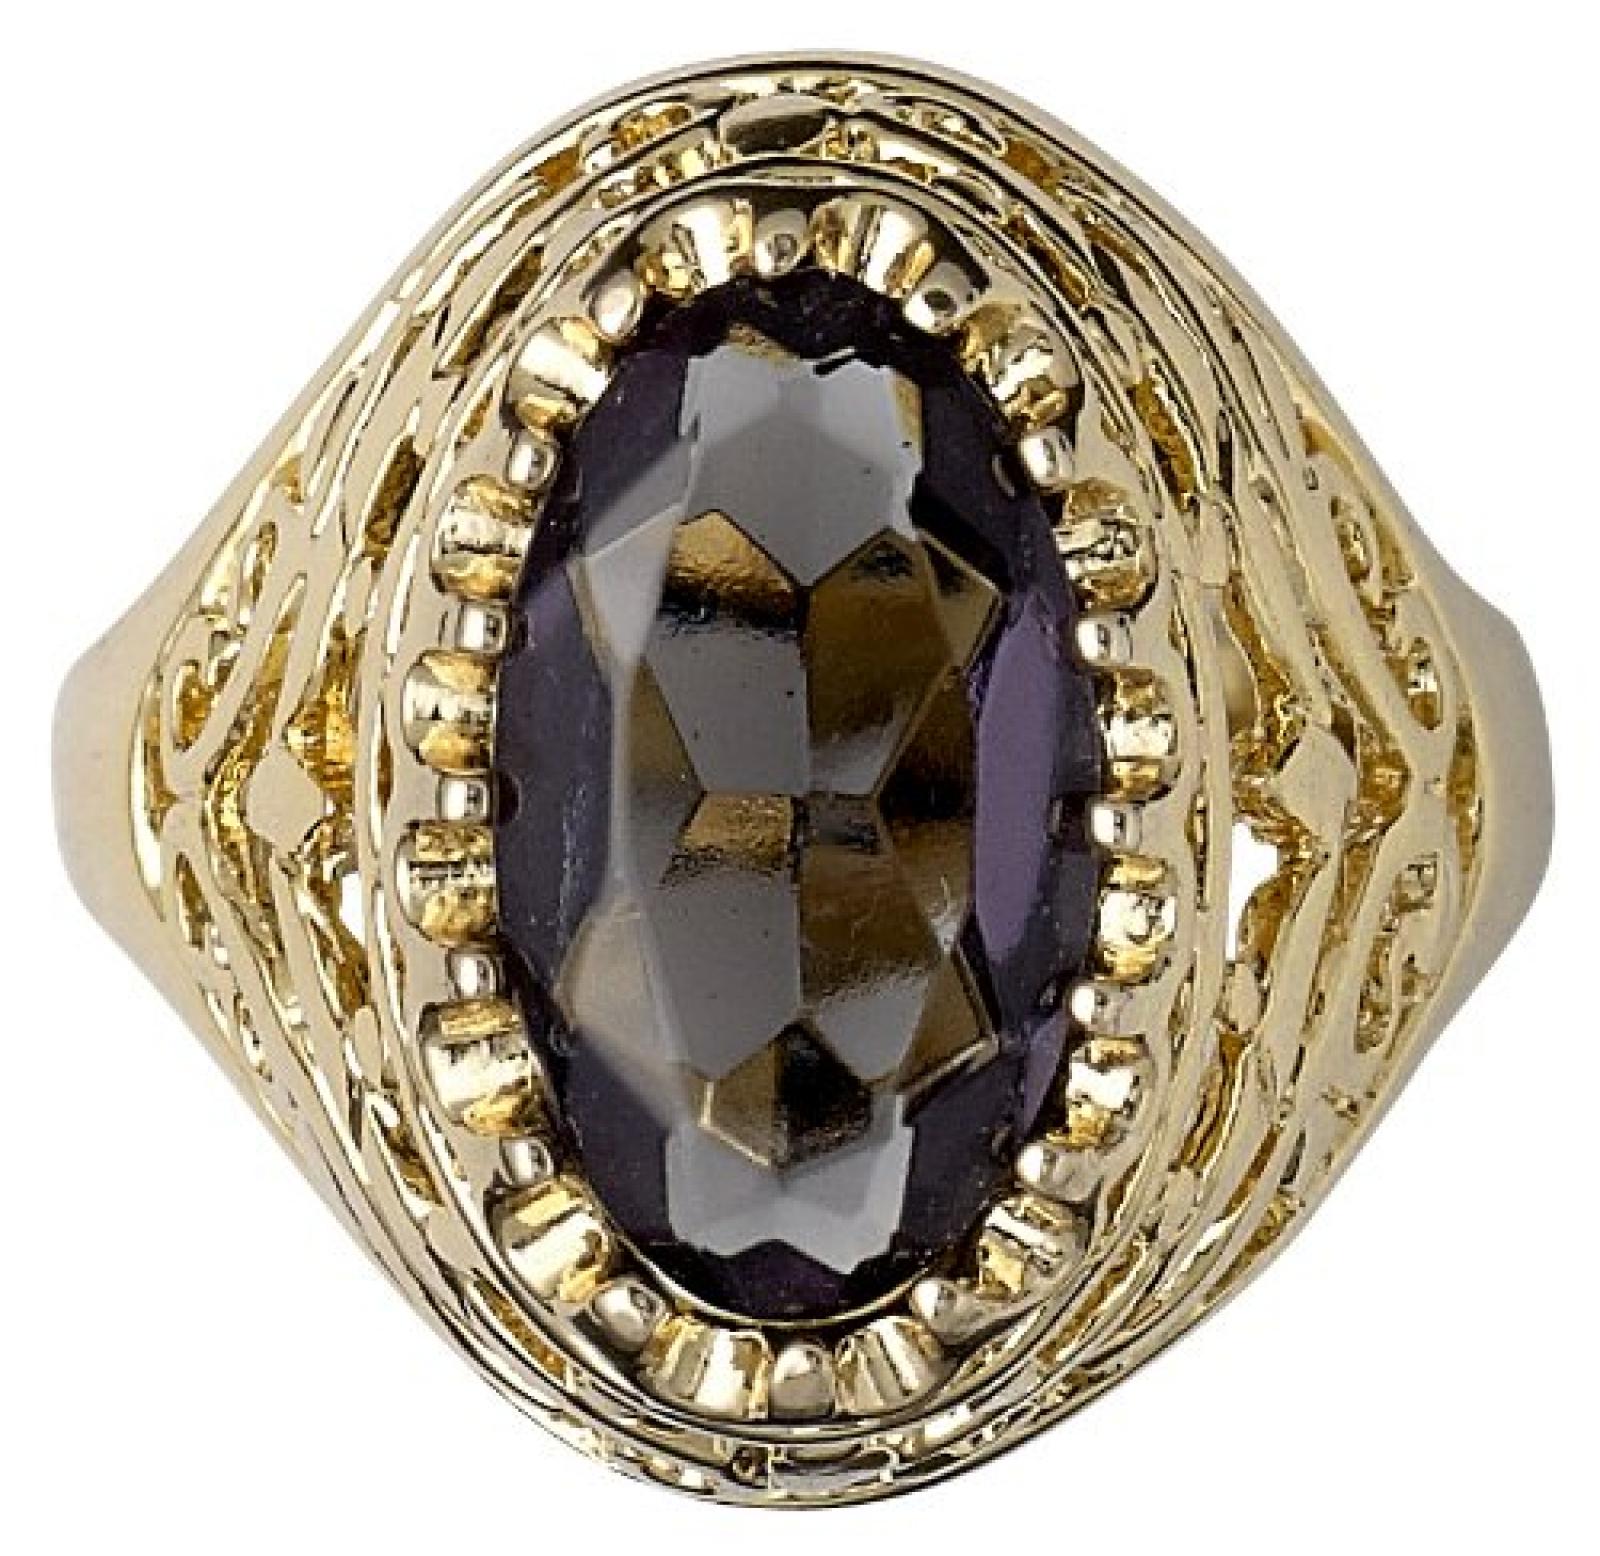 Pilgrim Jewelry Damen-Ring Messing Pilgrim Damen-Ring aus der Serie Russian loving vergoldet,grau  2.0 cm 231332104 